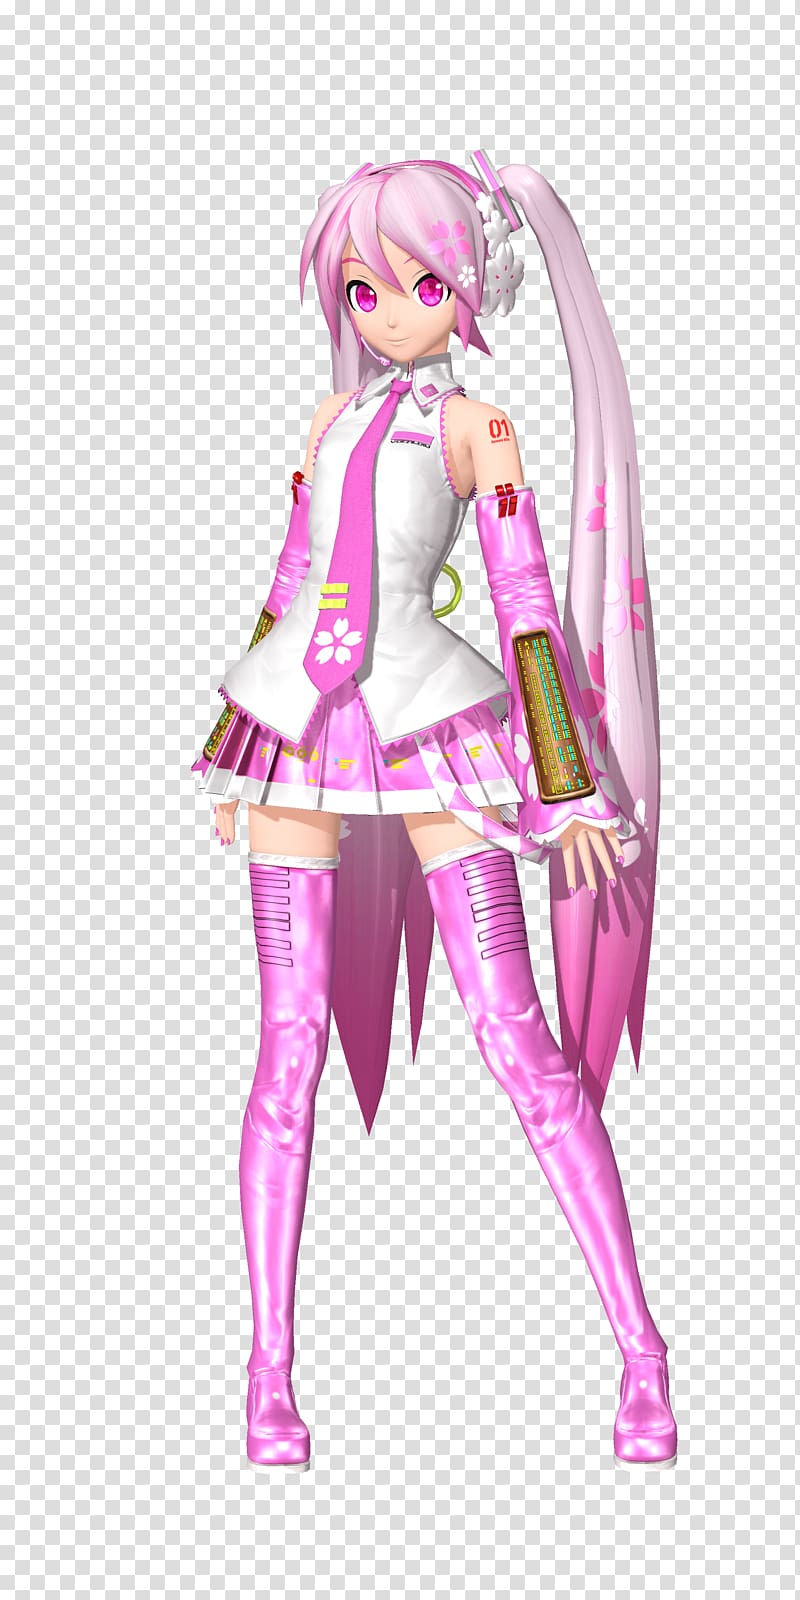 Costume design Pink M Anime Character, arvore sakura transparent background PNG clipart